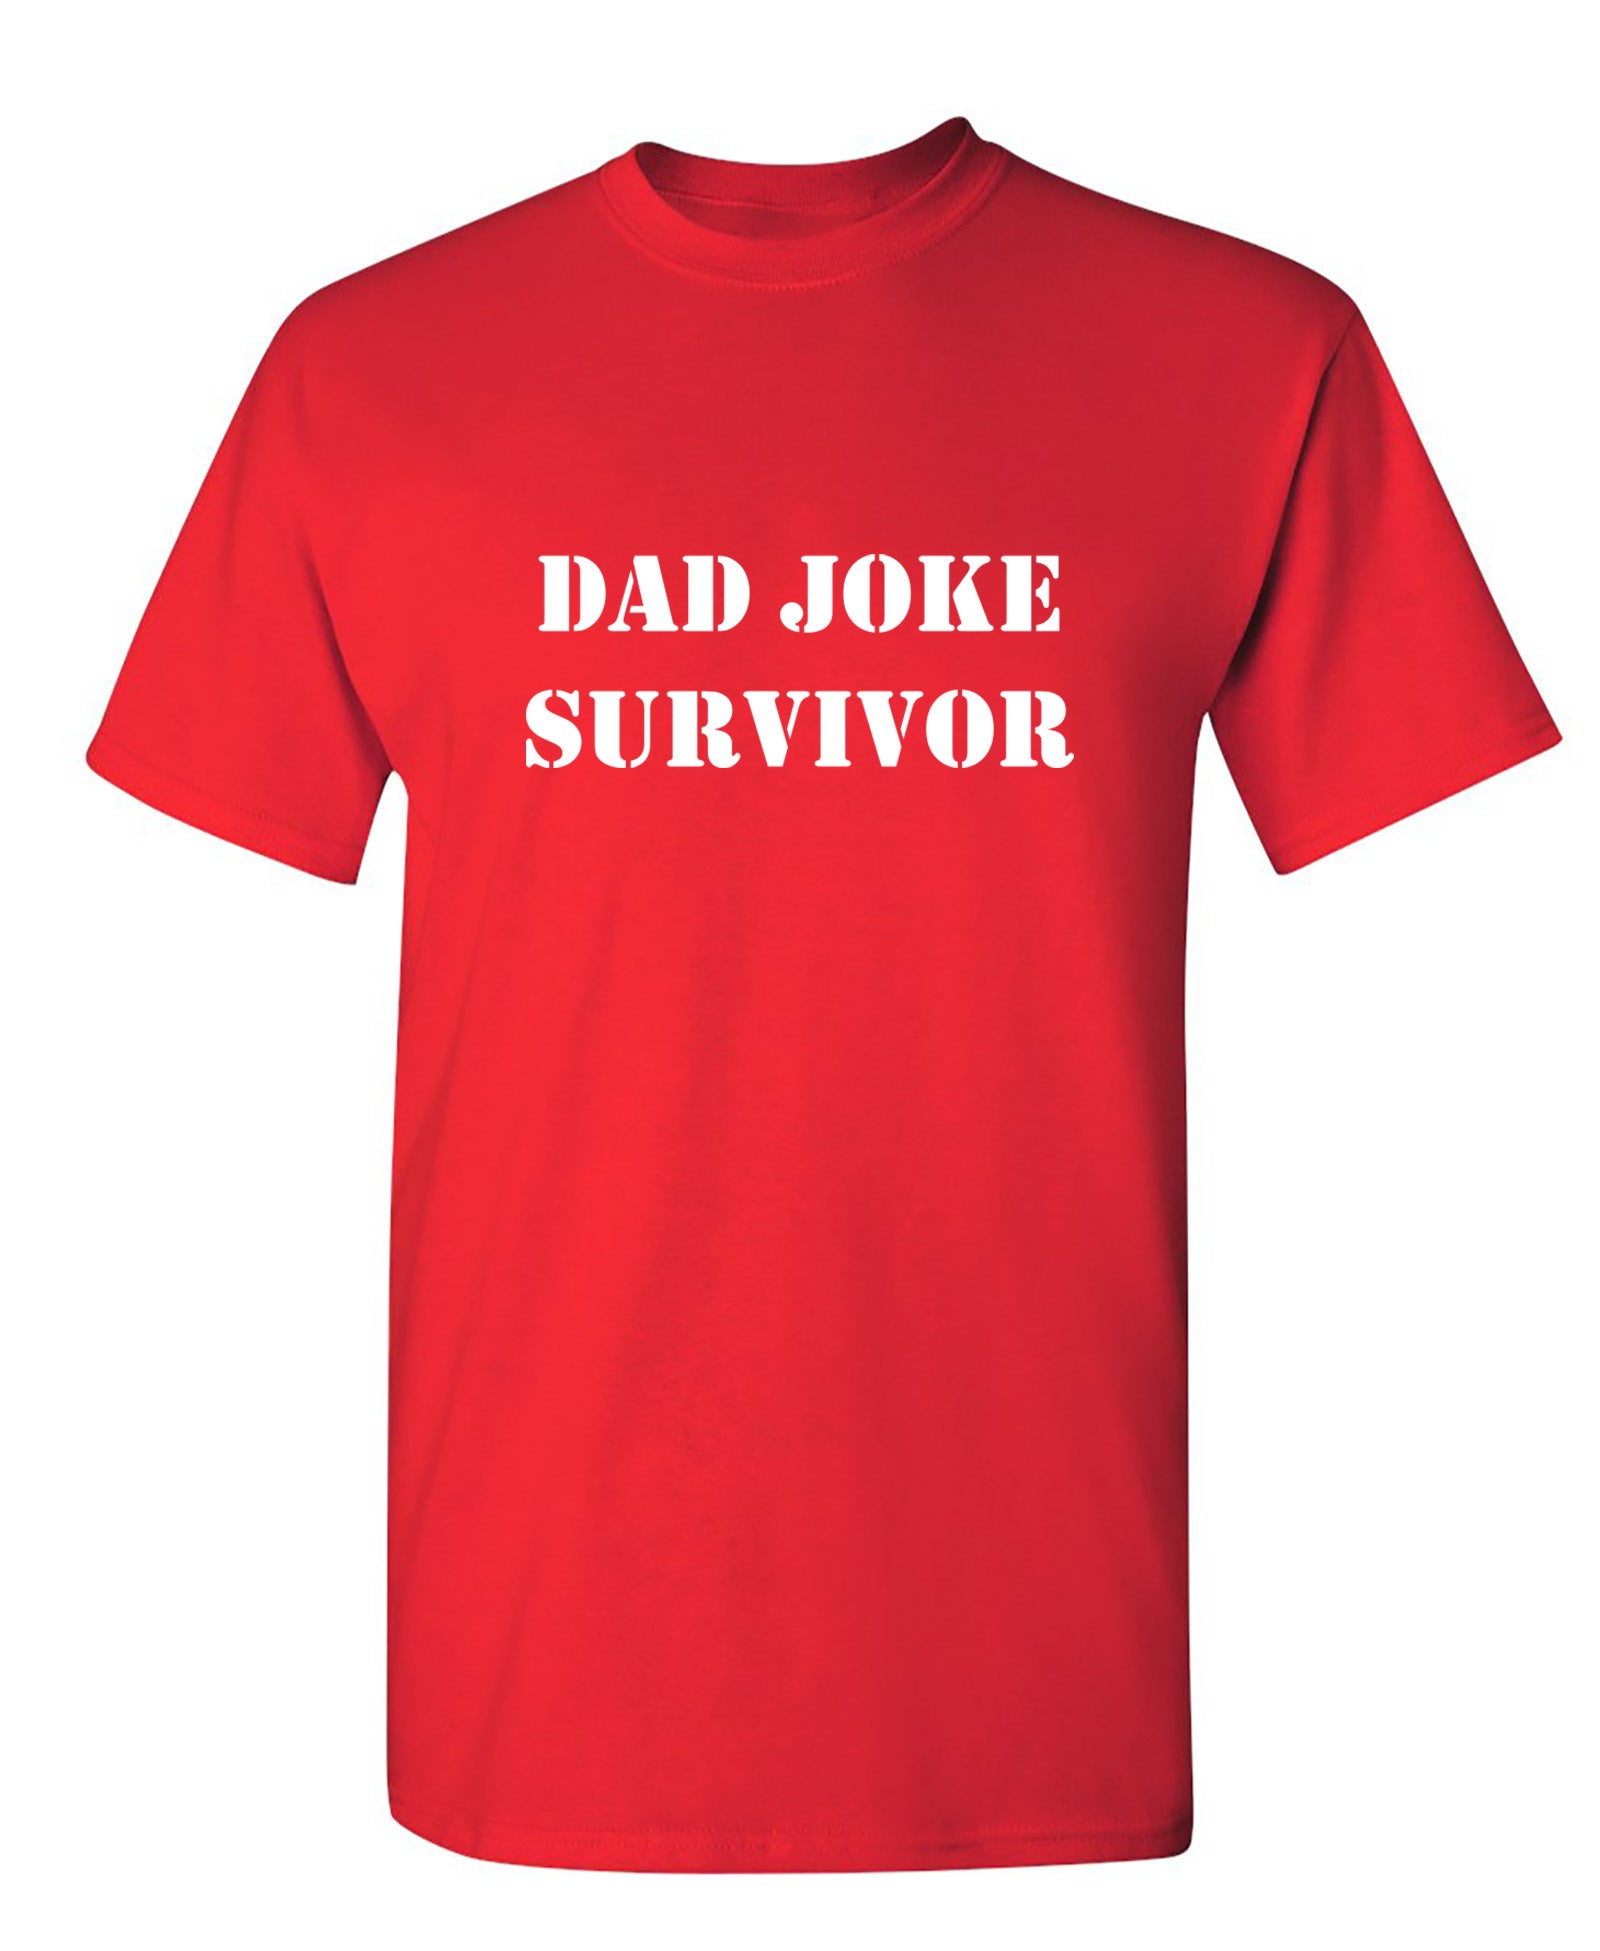 Dad Joke Survivor - Funny T Shirts & Graphic Tees